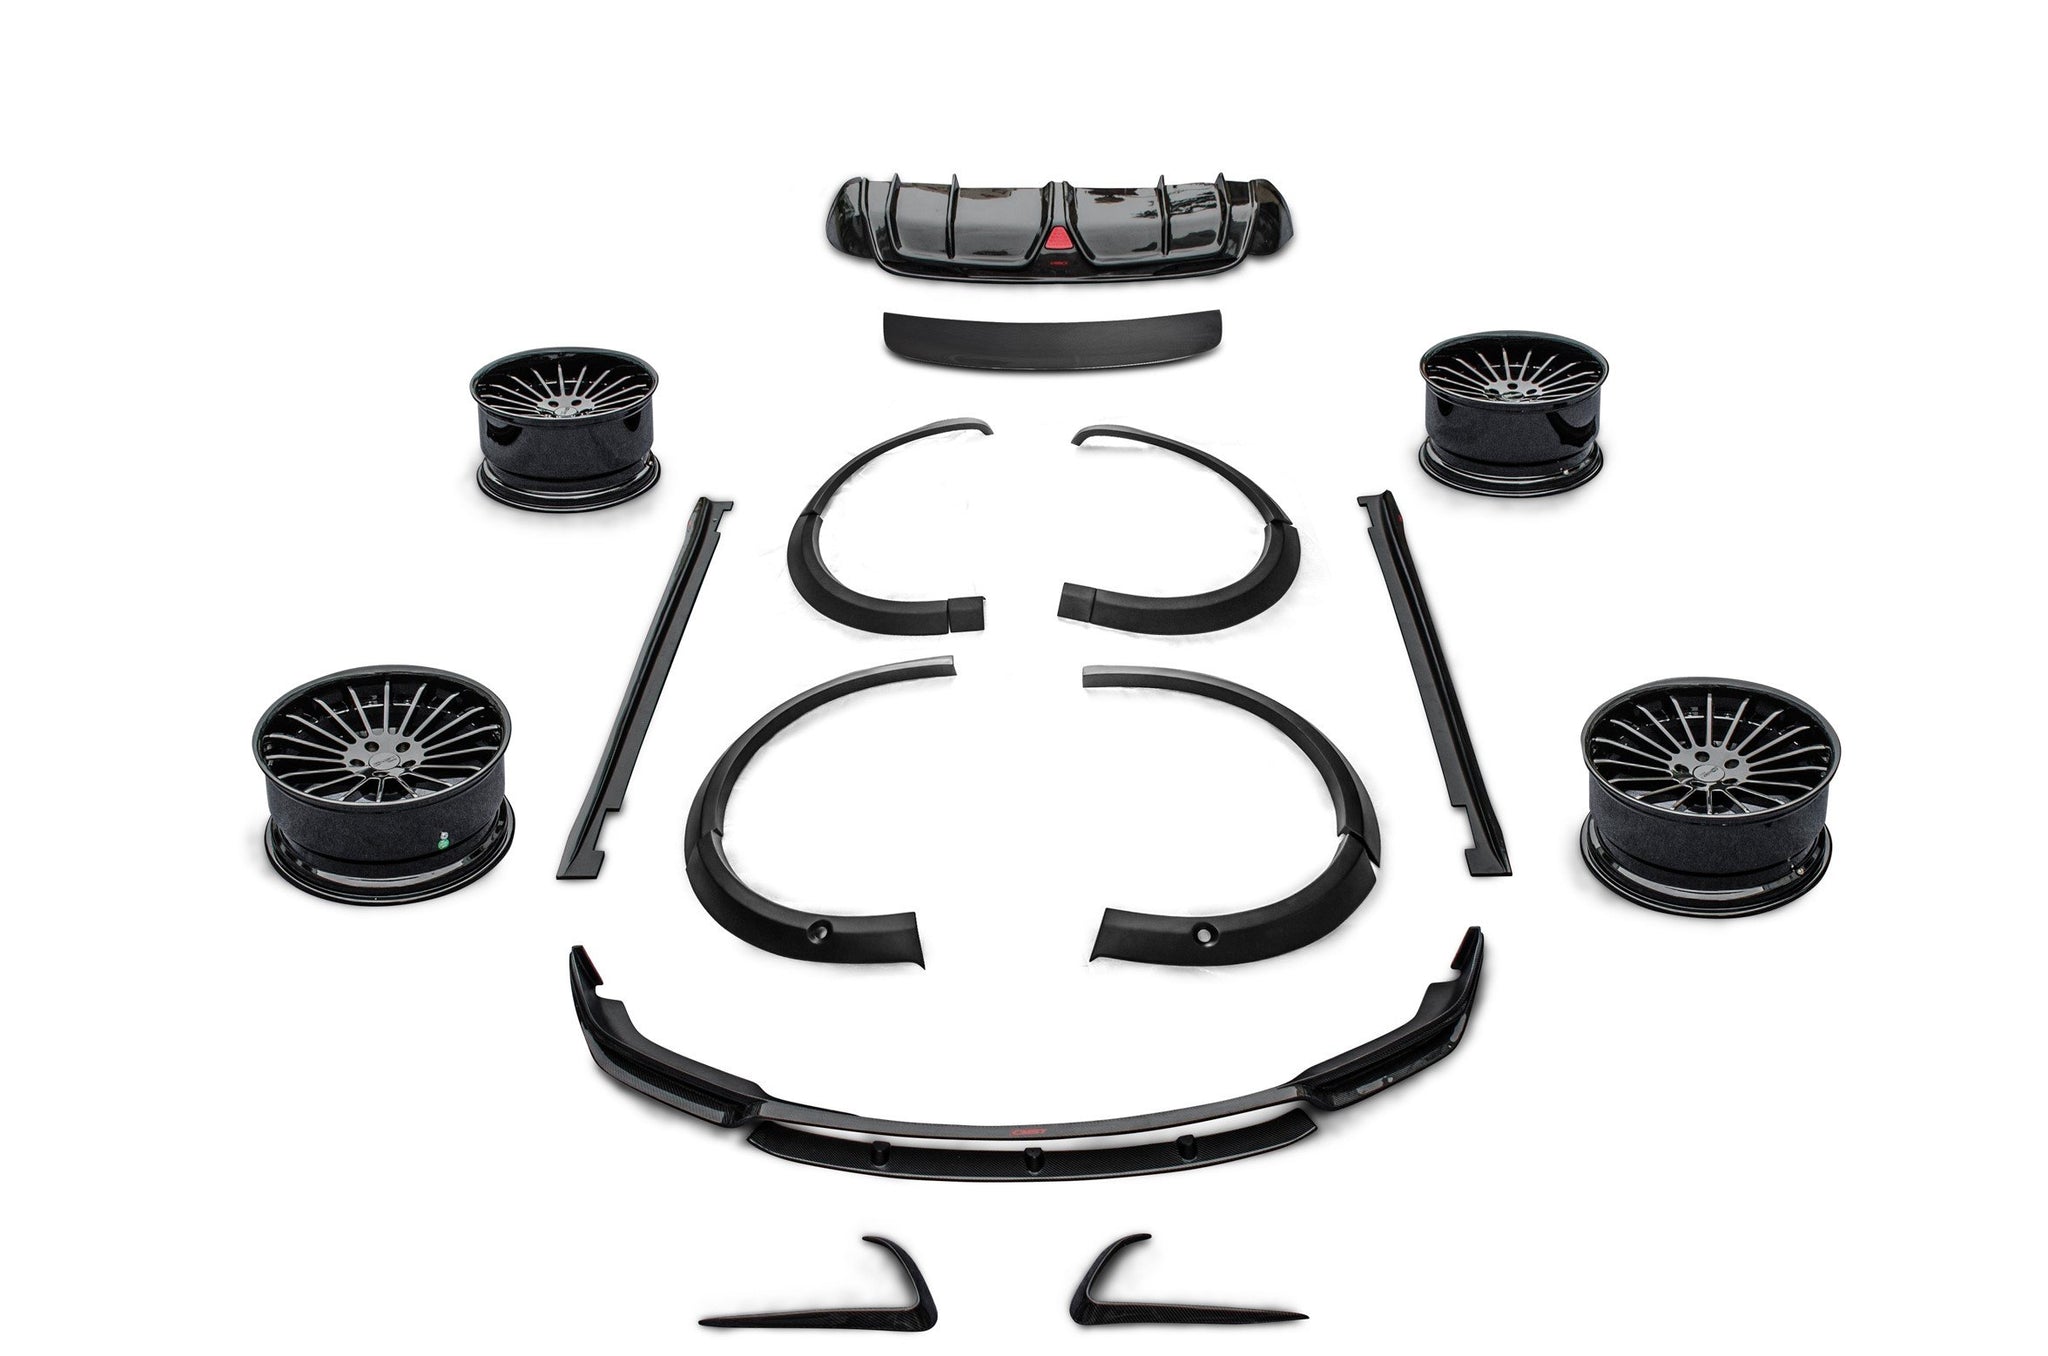 cmst-carbon-fiber-body-kit-set-for-tesla-model-x-compra-con-entrega